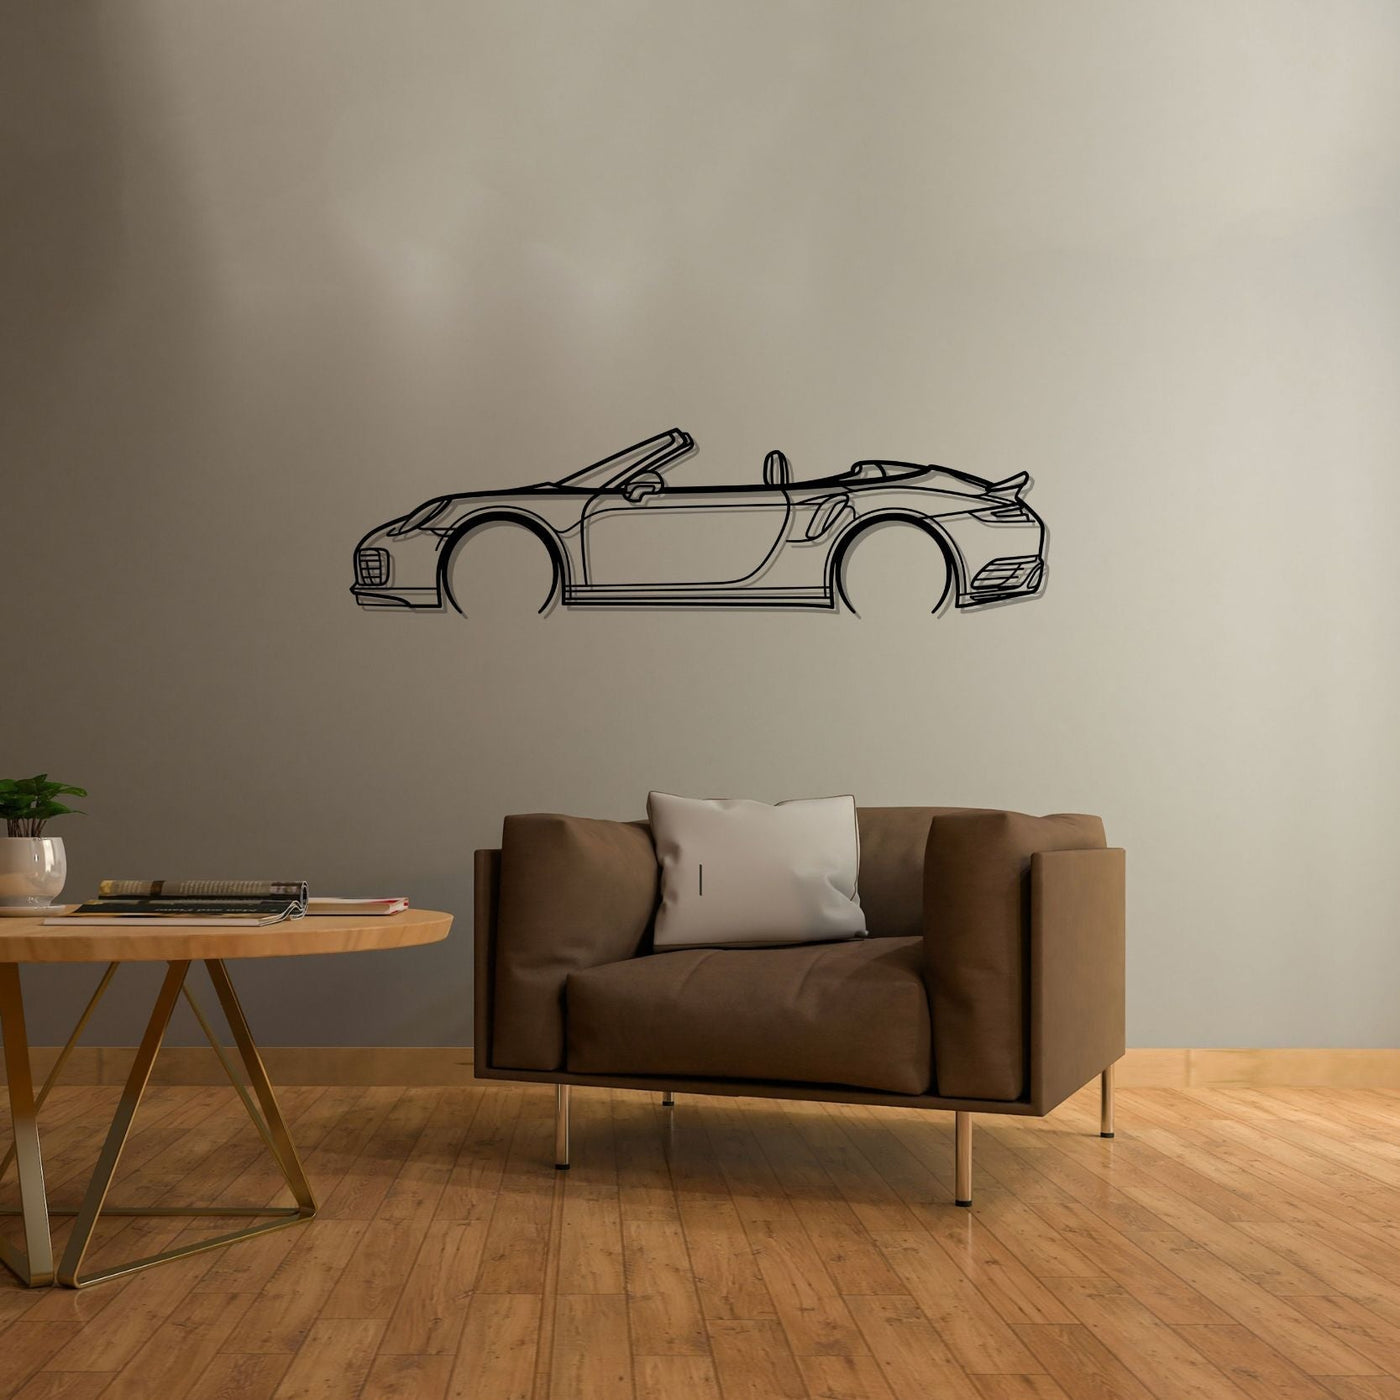 911 Turbo s cabrio model 991 Detailed Silhouette Metal Wall Art